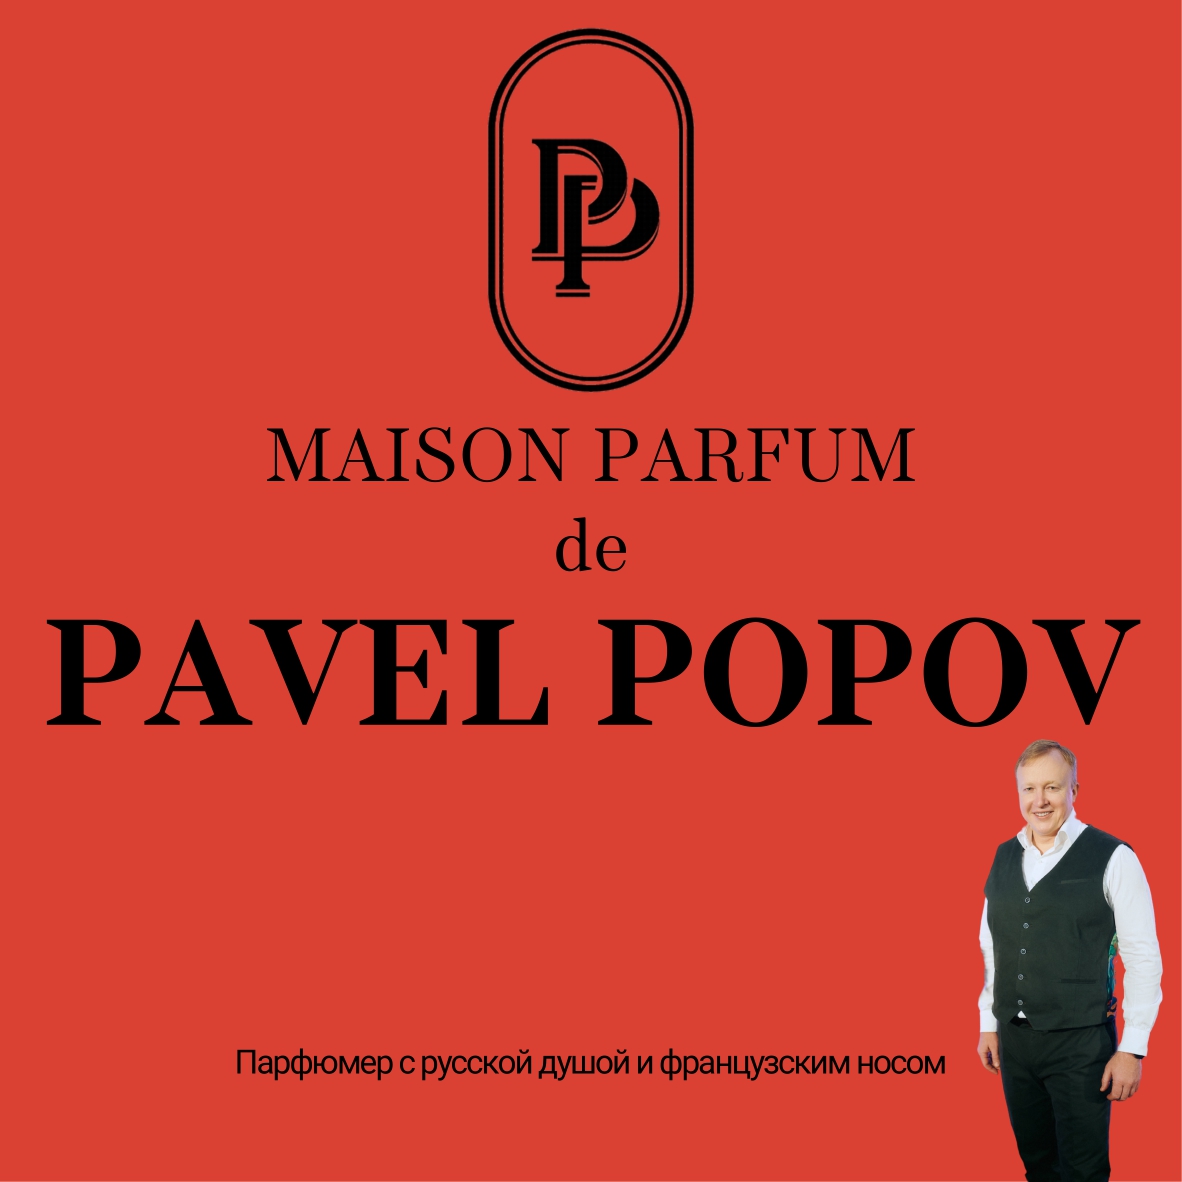 Брошюра "Maison Parfum de Pavel Popov"